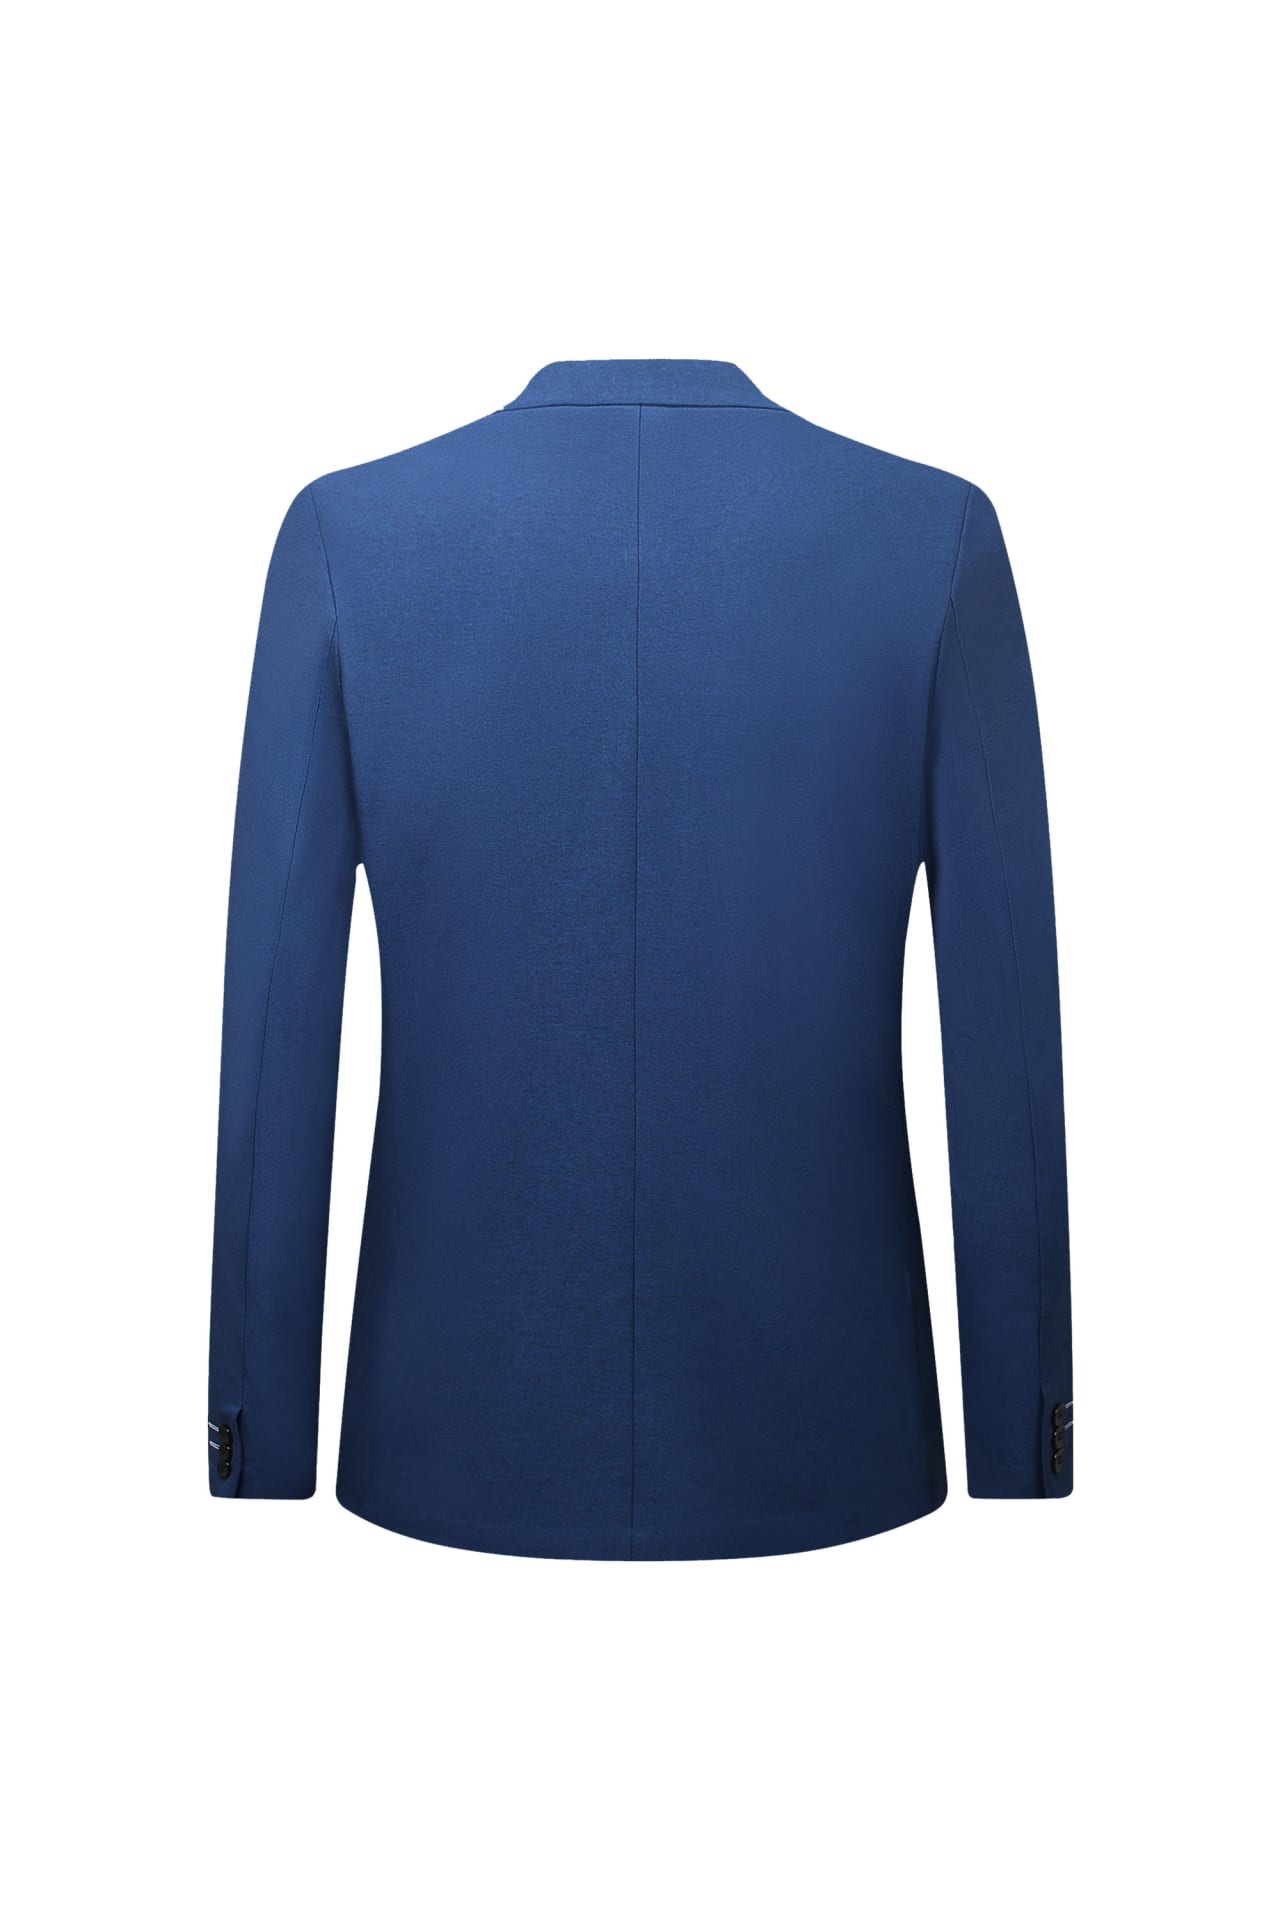 Porter Poly Spx Twill (Cooling Fiber) Suit Blazer